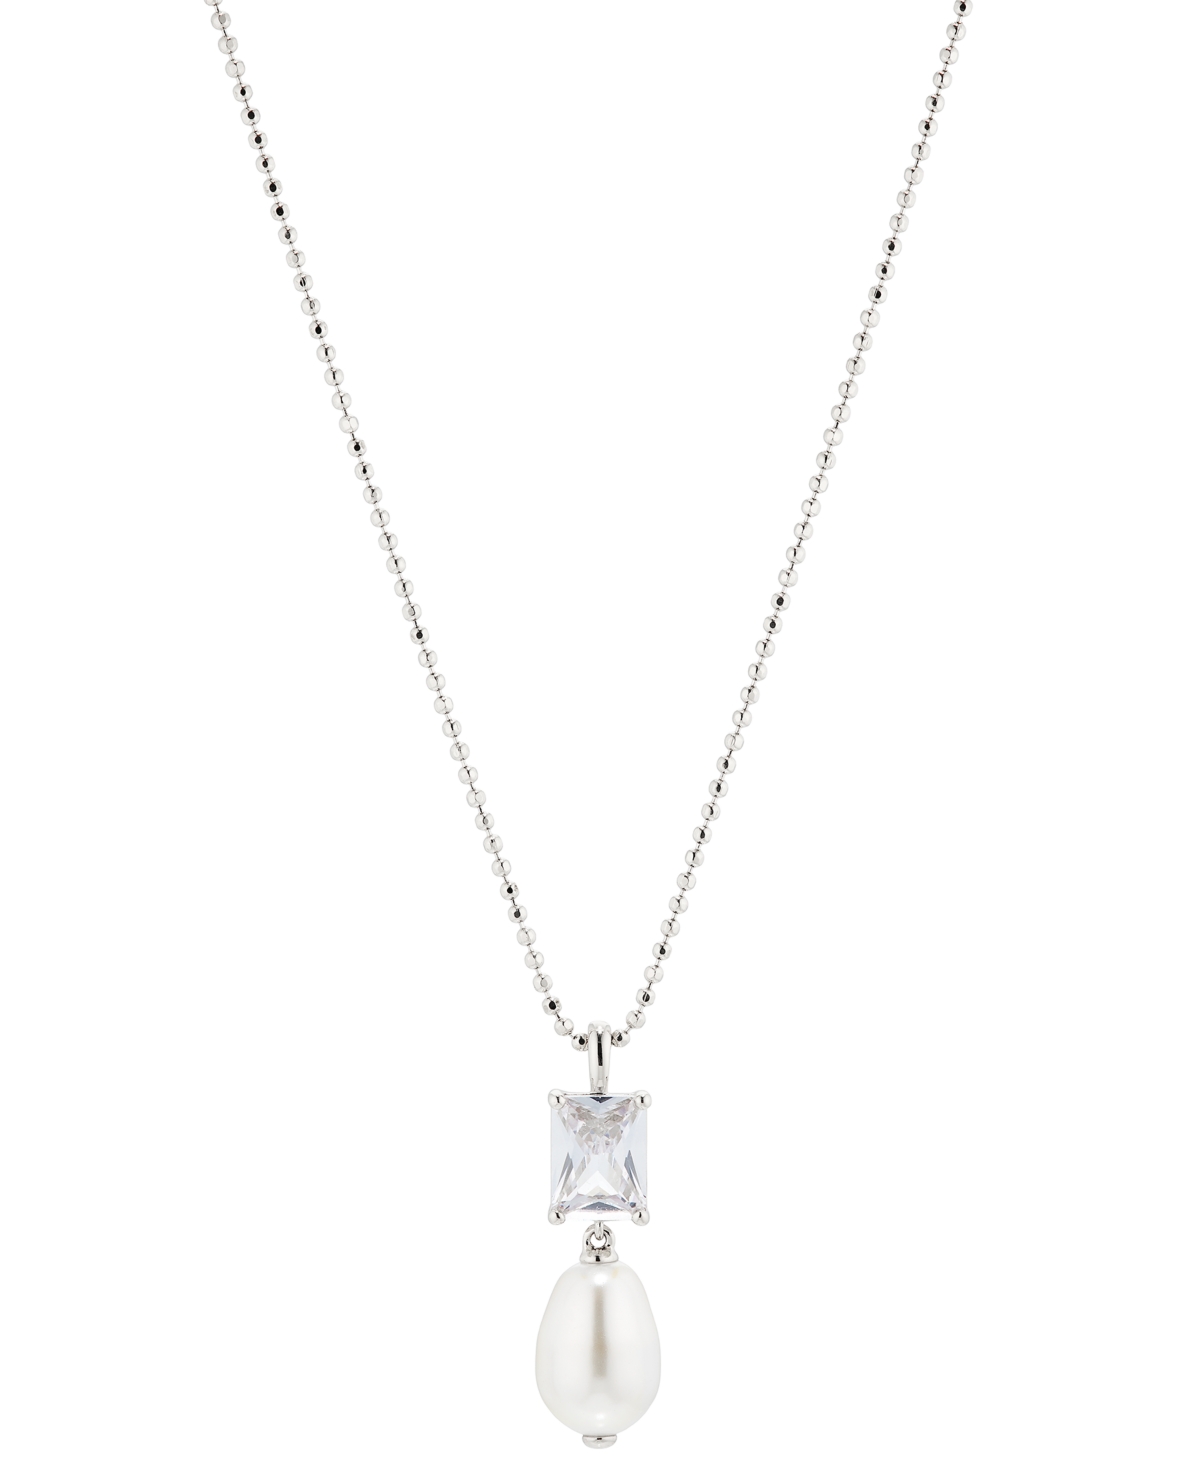 Eliot Danori 18k Gold-Plated Cubic Zirconia & Imitation Pearl Pendant Necklace, 16" + 2" extender, Created for Macy's - Rhodium